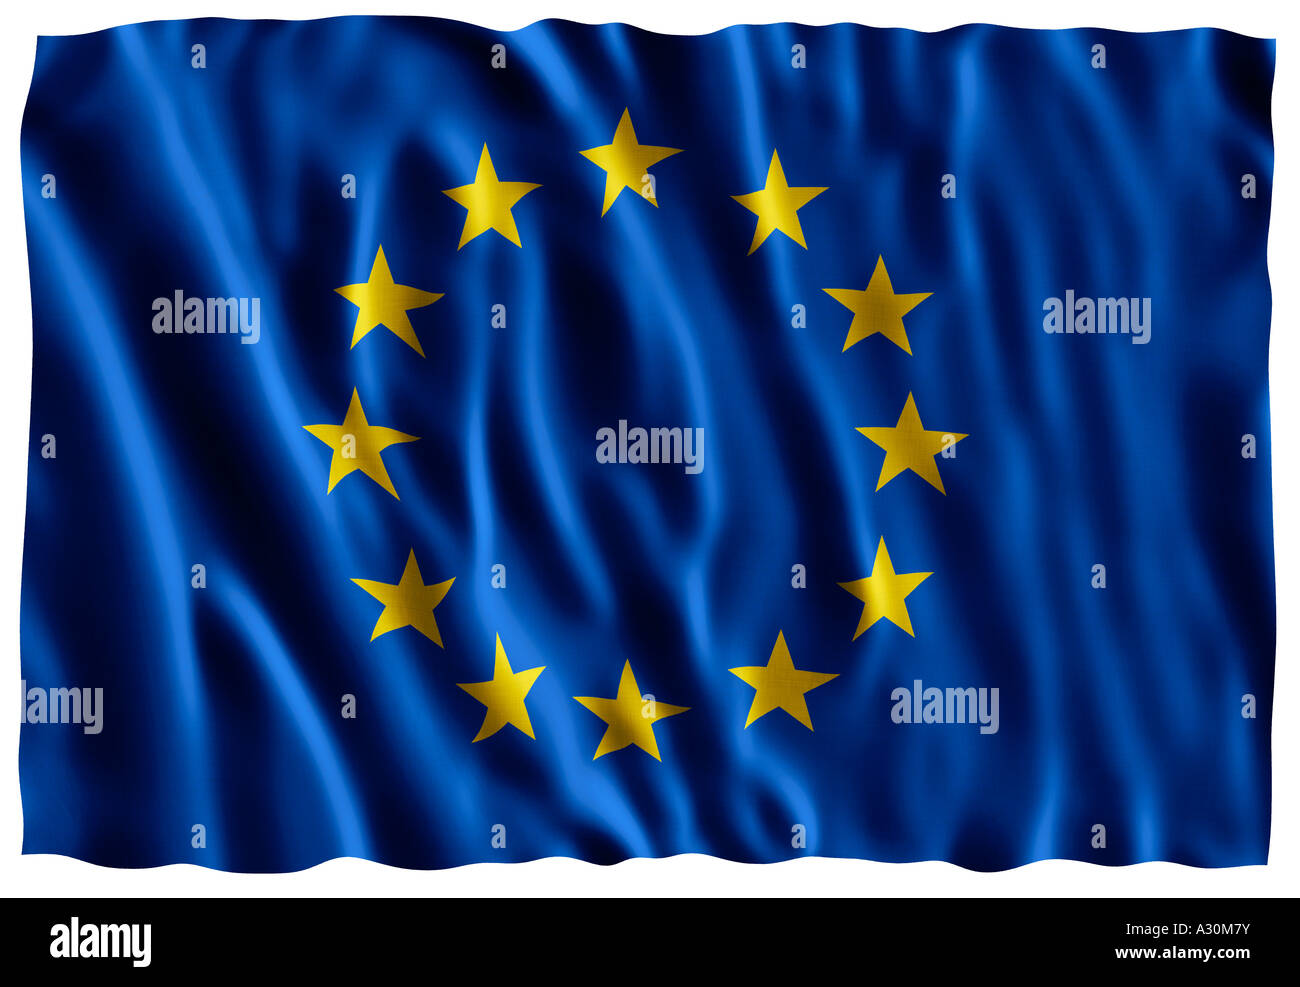 Flag of the European Union also known as the European Community Stock Photo